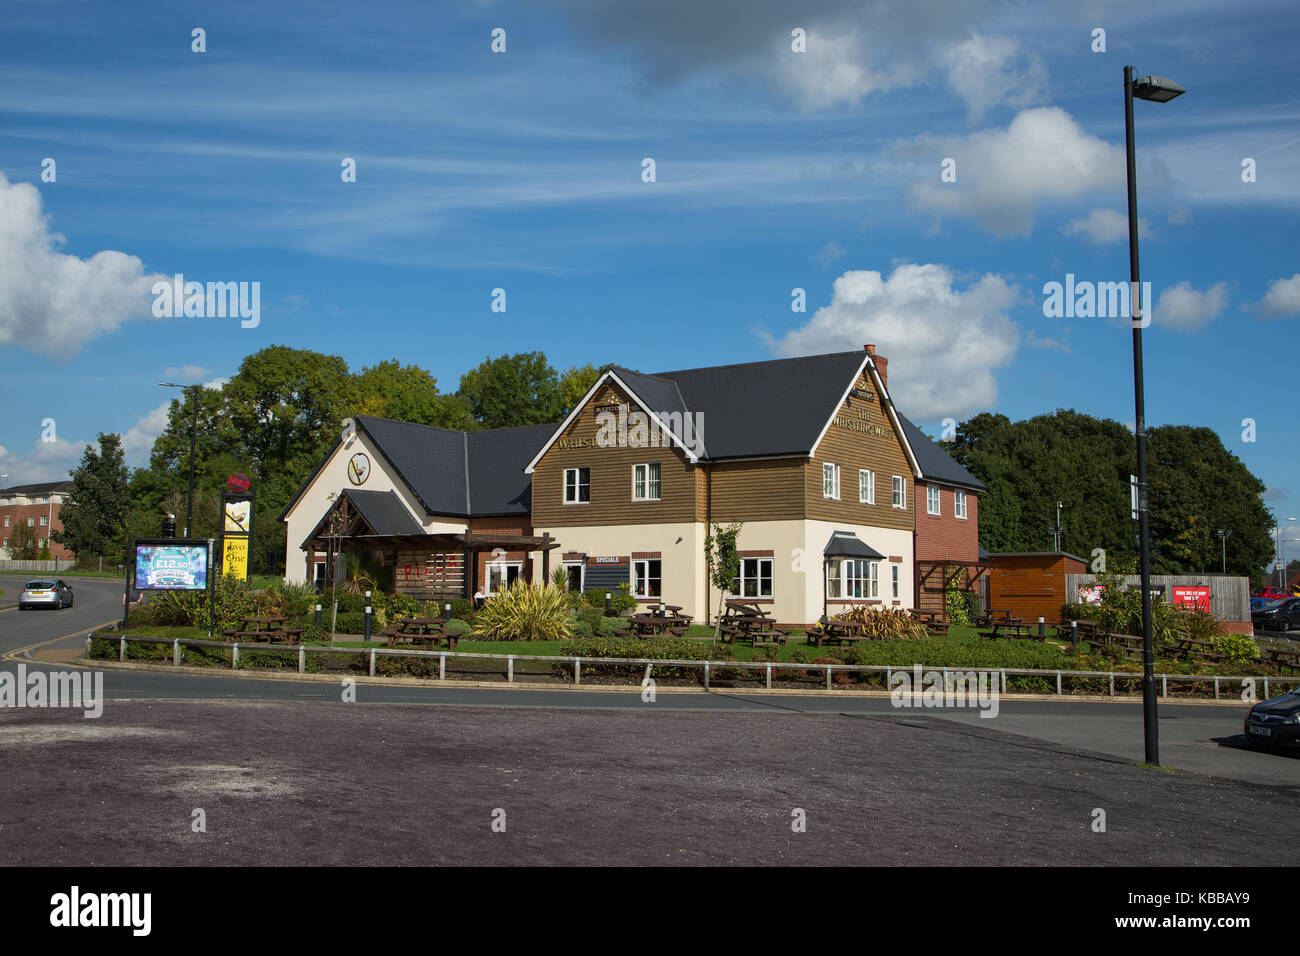 Whistling Wren Pub & Restaurant at LEigh Sports Village, Leigh, England, UK Stock Photo